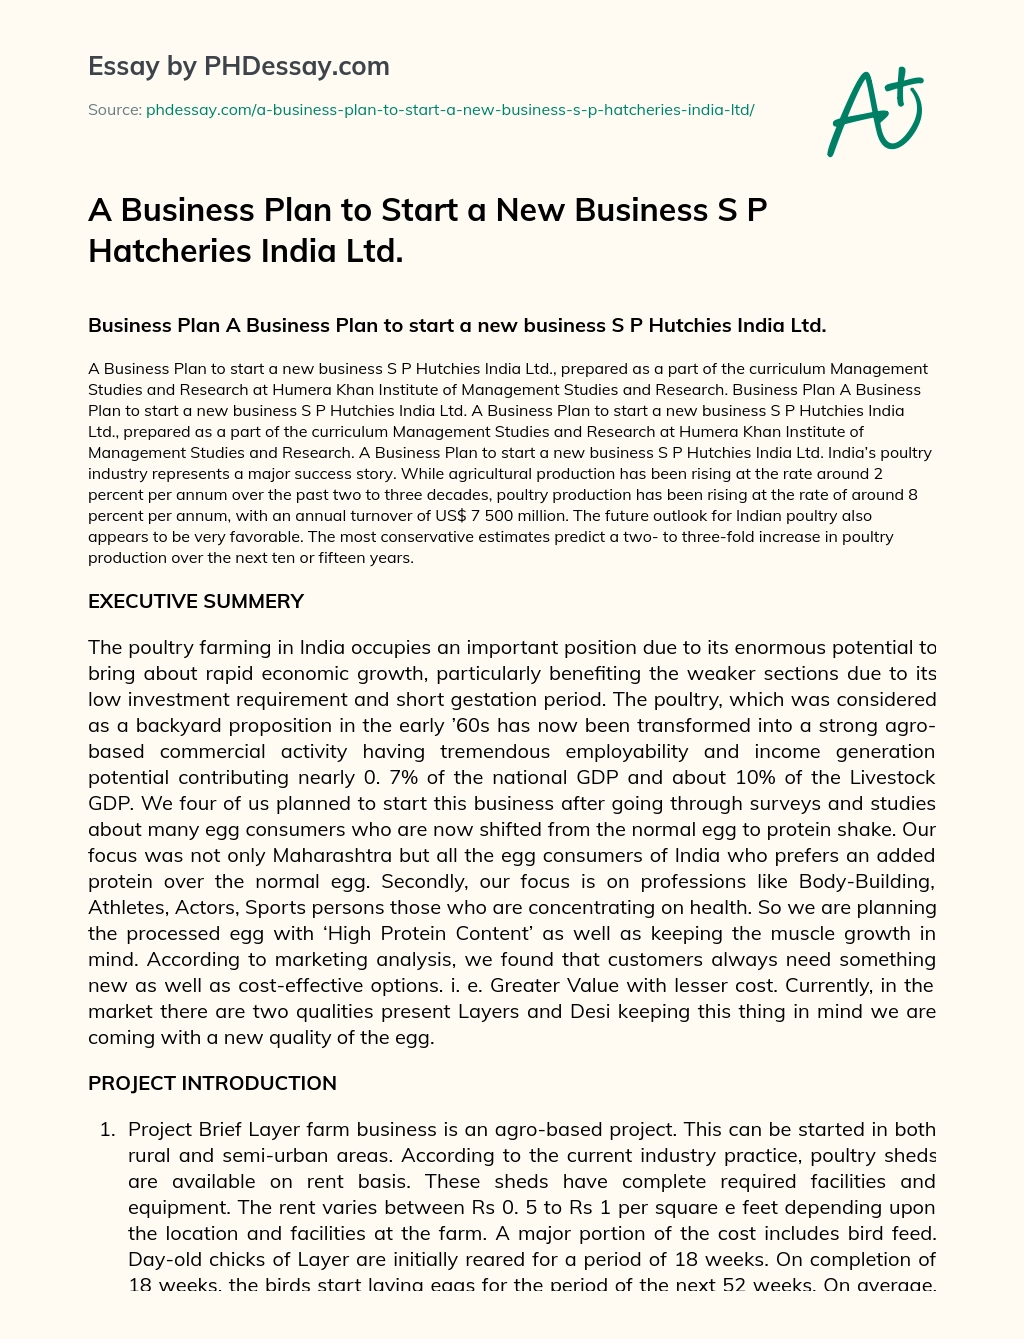 A Business Plan to Start a New Business S P Hatcheries India Ltd. essay